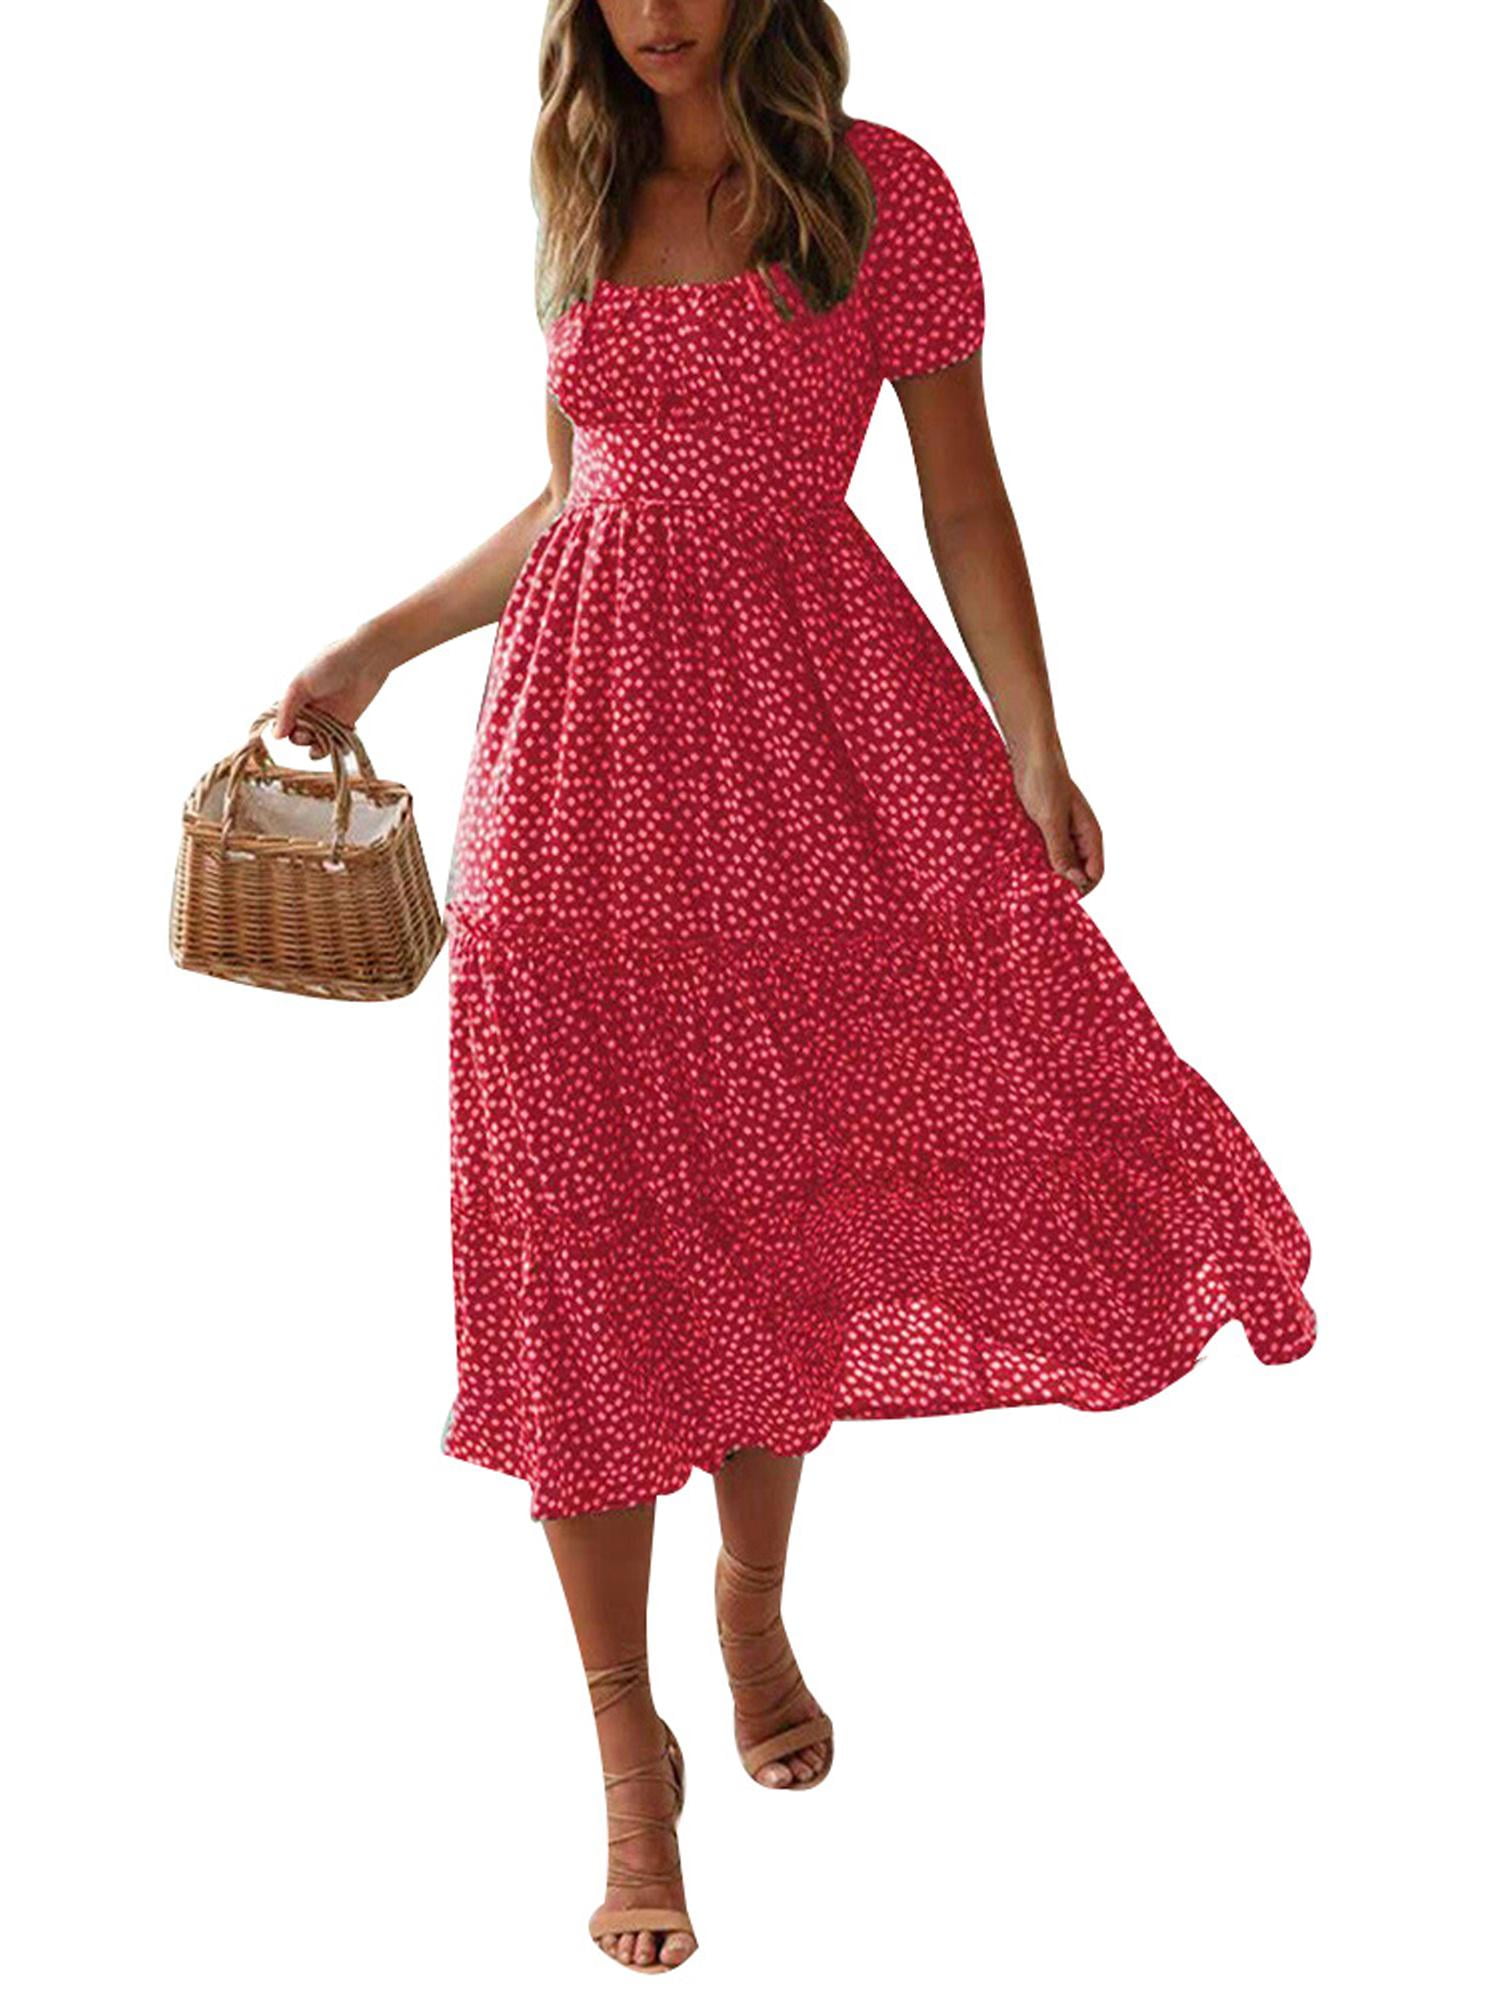 LOMON Vintage Dresses for Women Ruffle Polka Loose Fitting Summer Dress Half Sleeve 